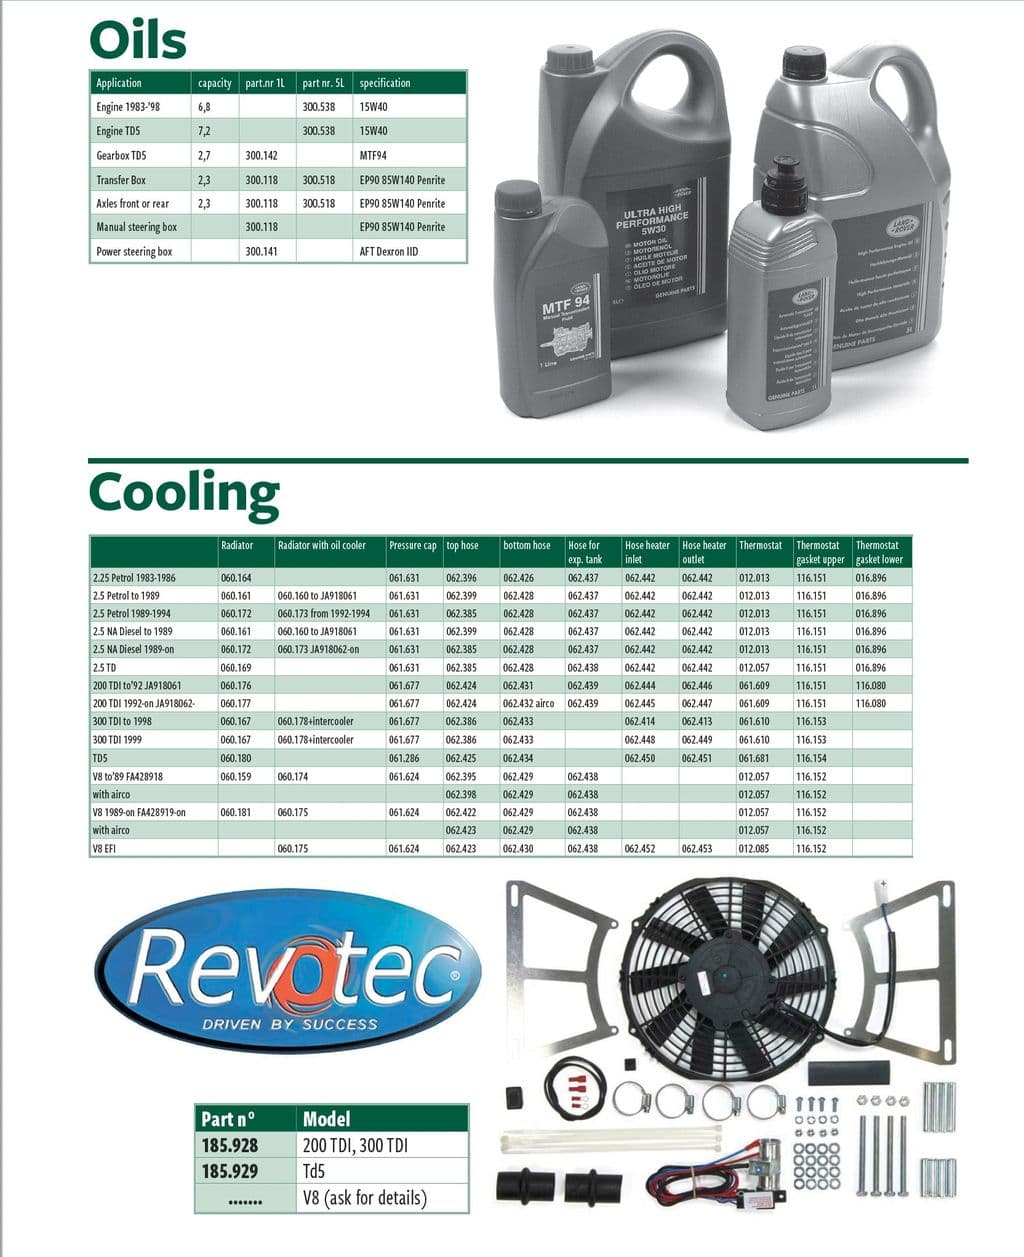 Oils & cooling - Sistema Raffreddamento Motore - Sistema Raffreddamento Motore - Land Rover Defender 90-110 1984-2006 - Oils & cooling - 1